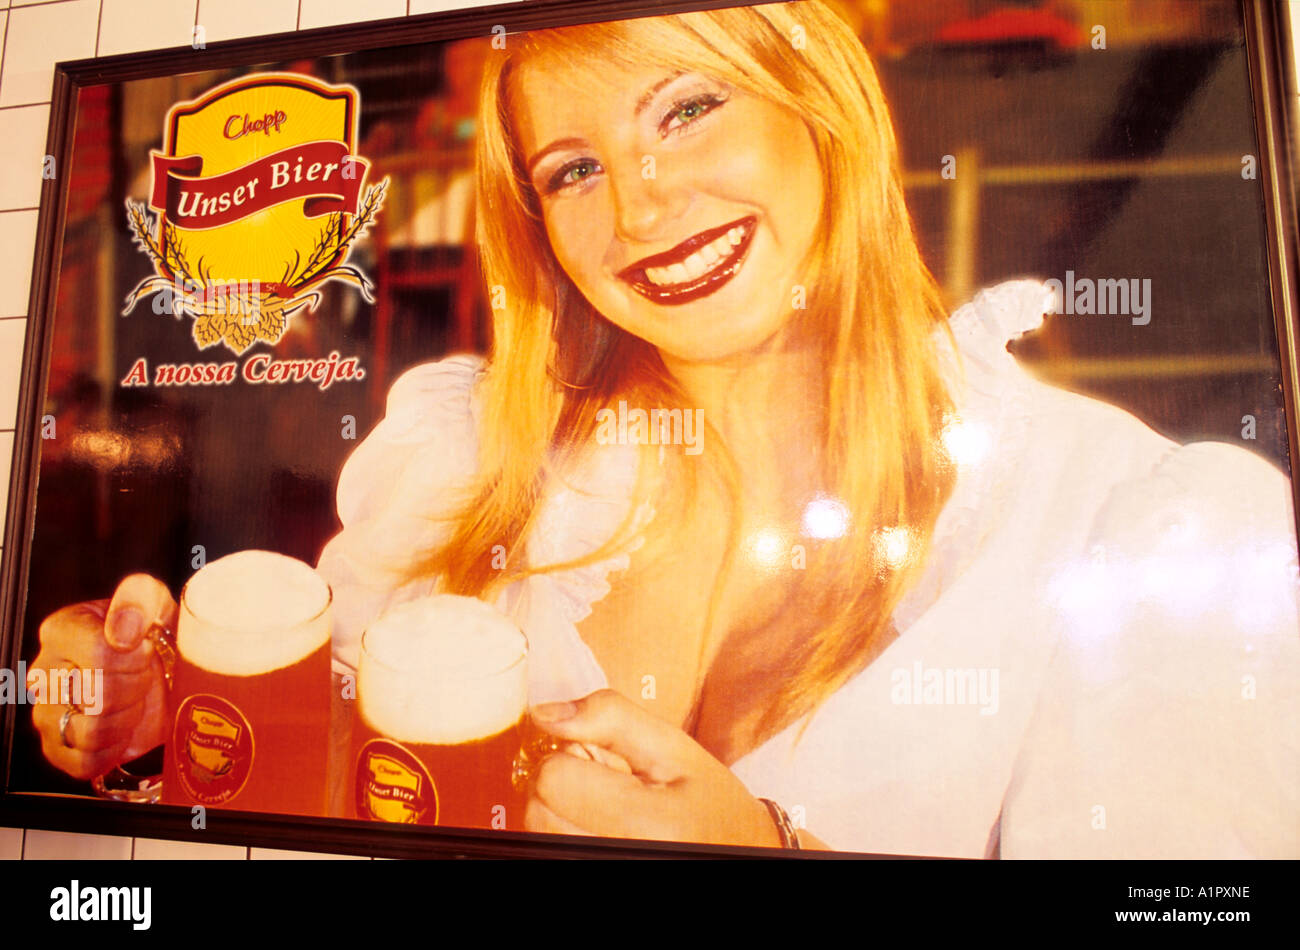 Blond woman smiling on advertisement image for beer, Biergarten, Blumenau, European Valley, Santa Catarina, Brazil, South Americ Stock Photo